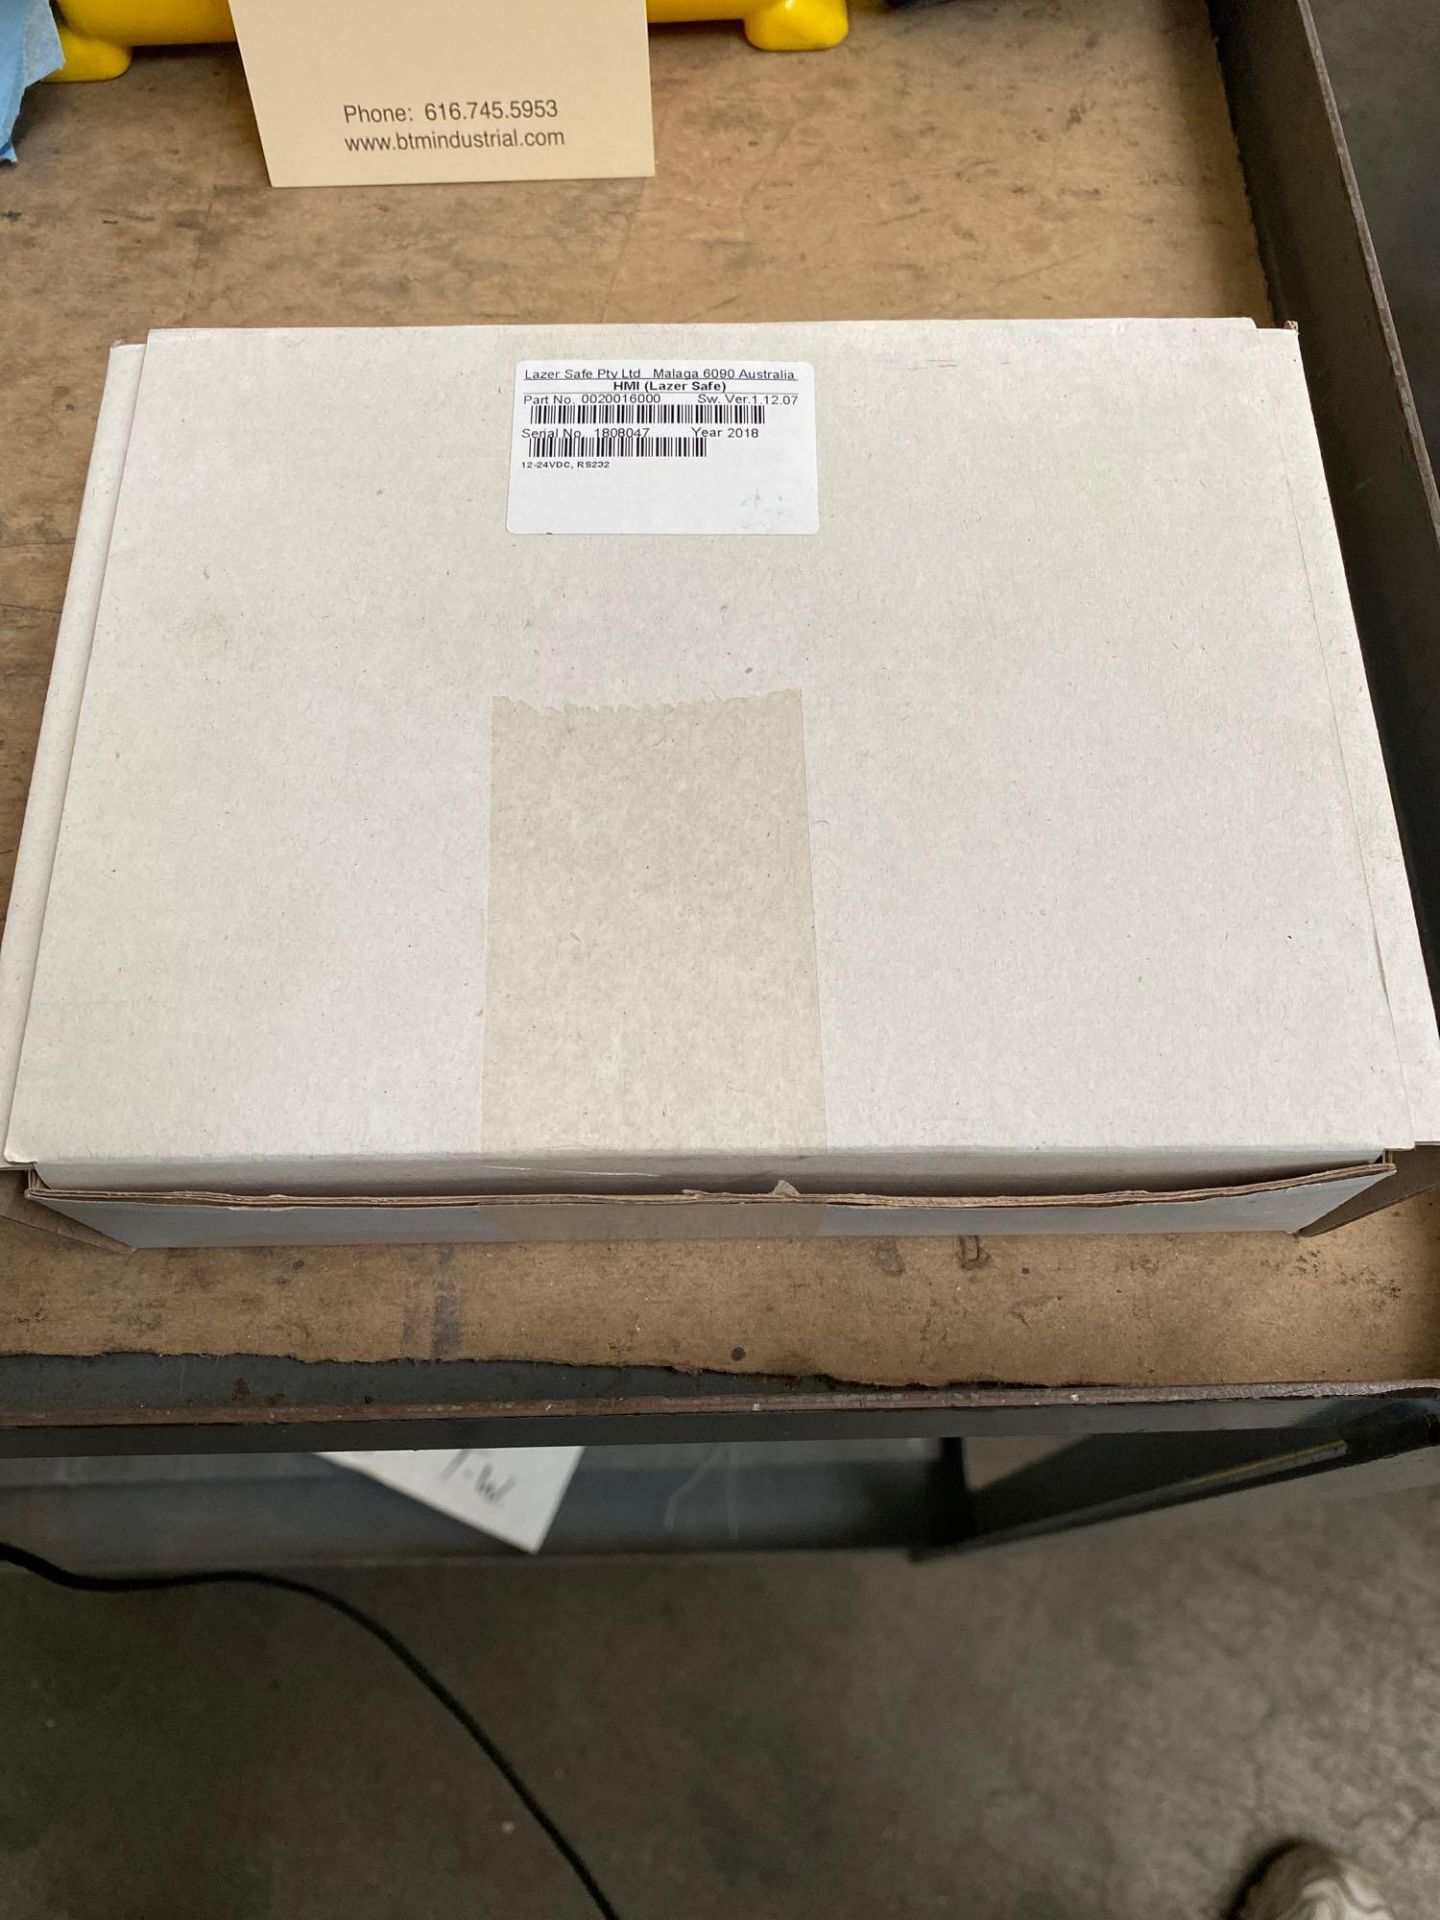 NEW Lazer Safe HMI, P/N 002001600, Mfg'd: 2018